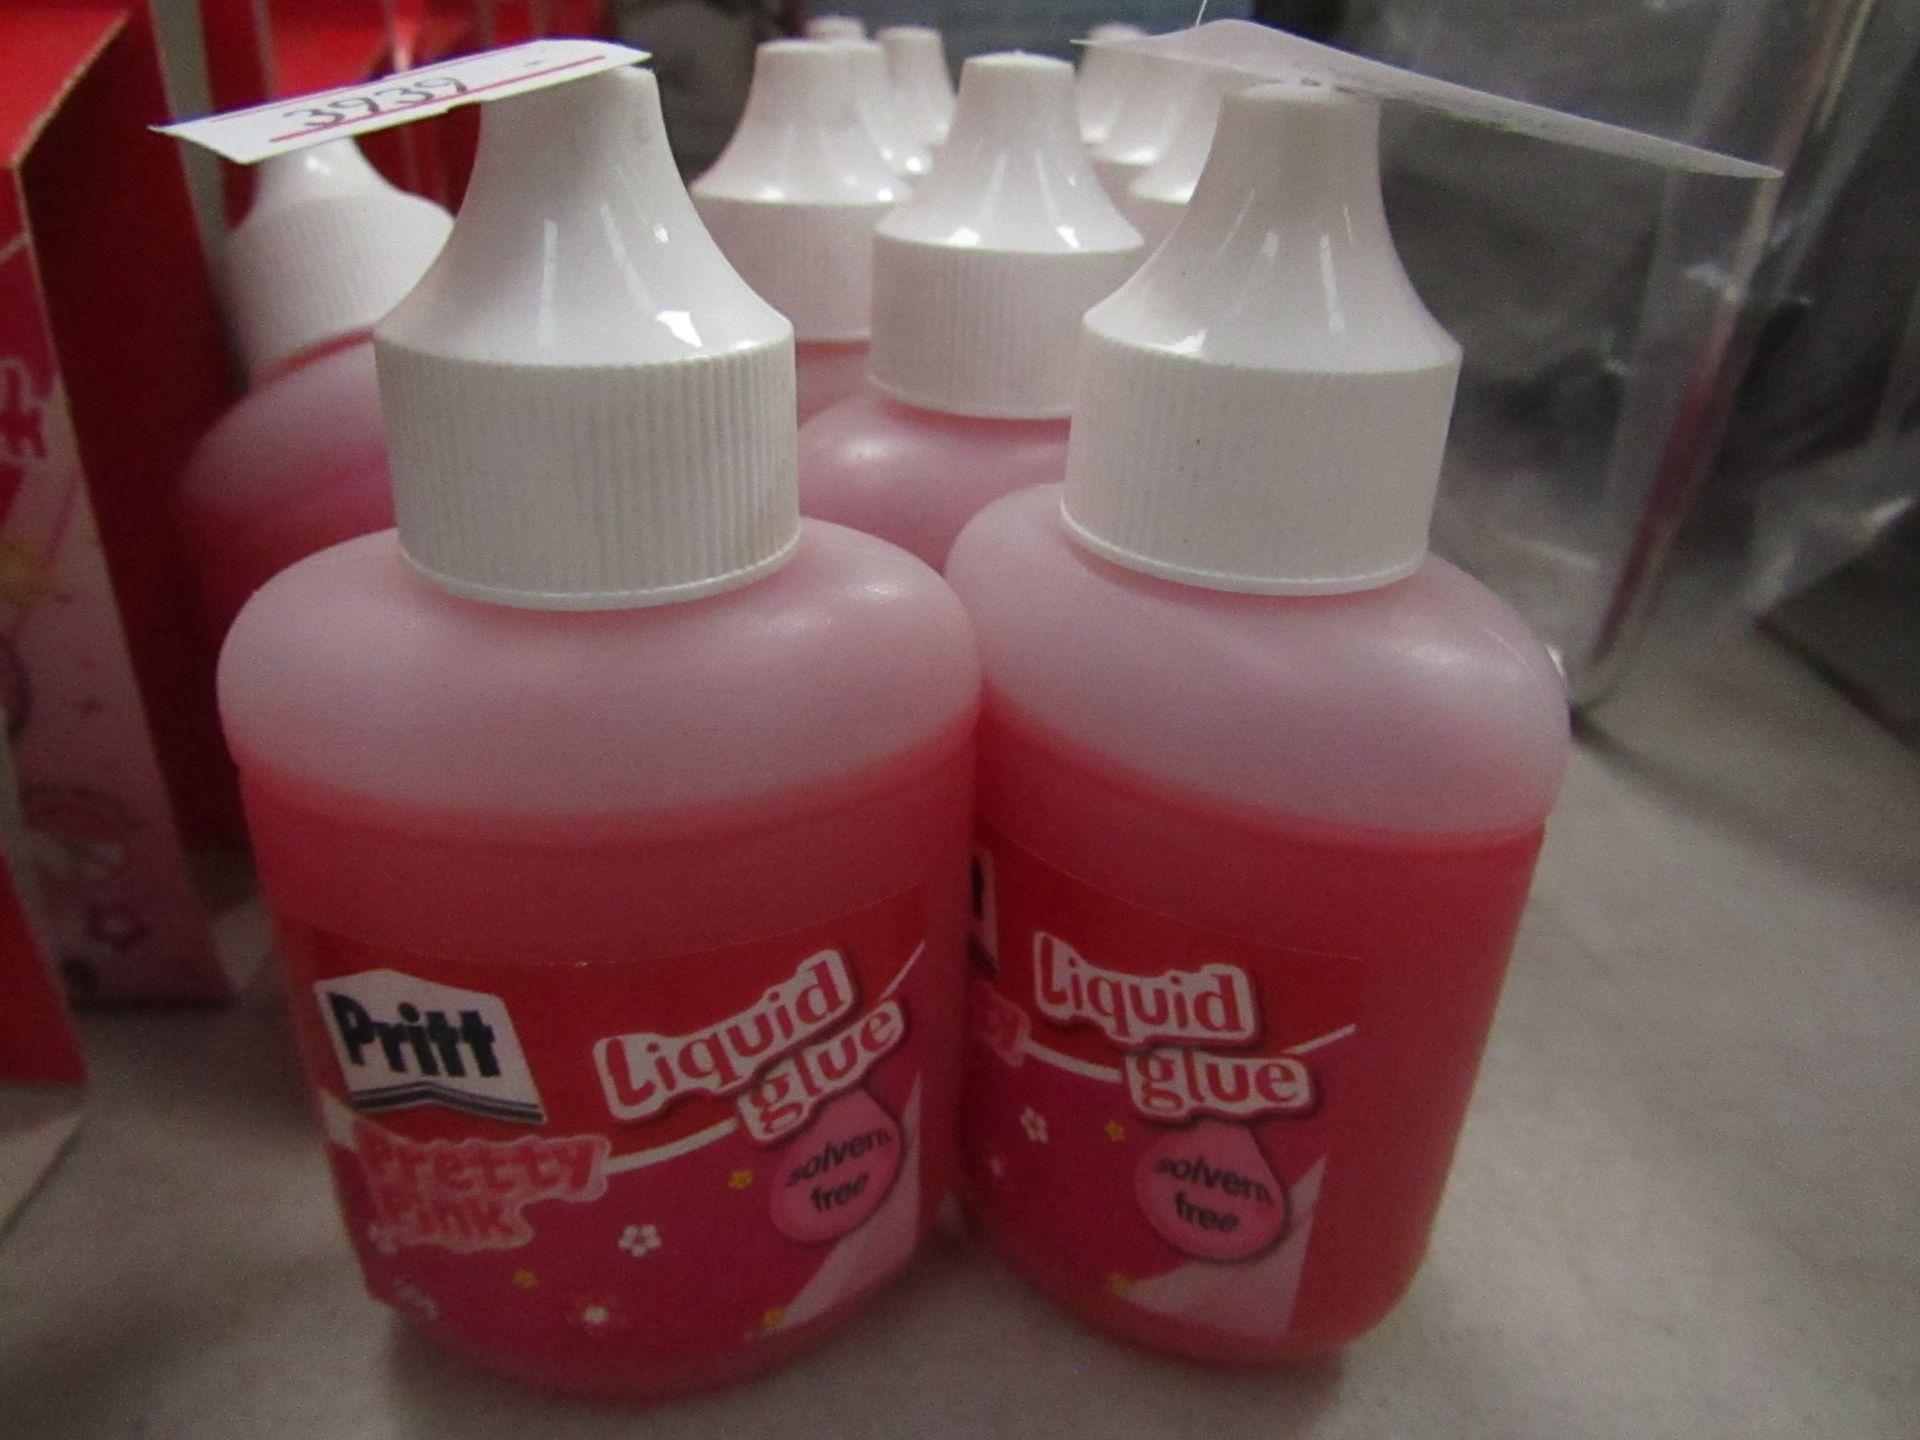 12x Pritt - Pretty Pink Liquid Glue 50g Tubes - Unused.